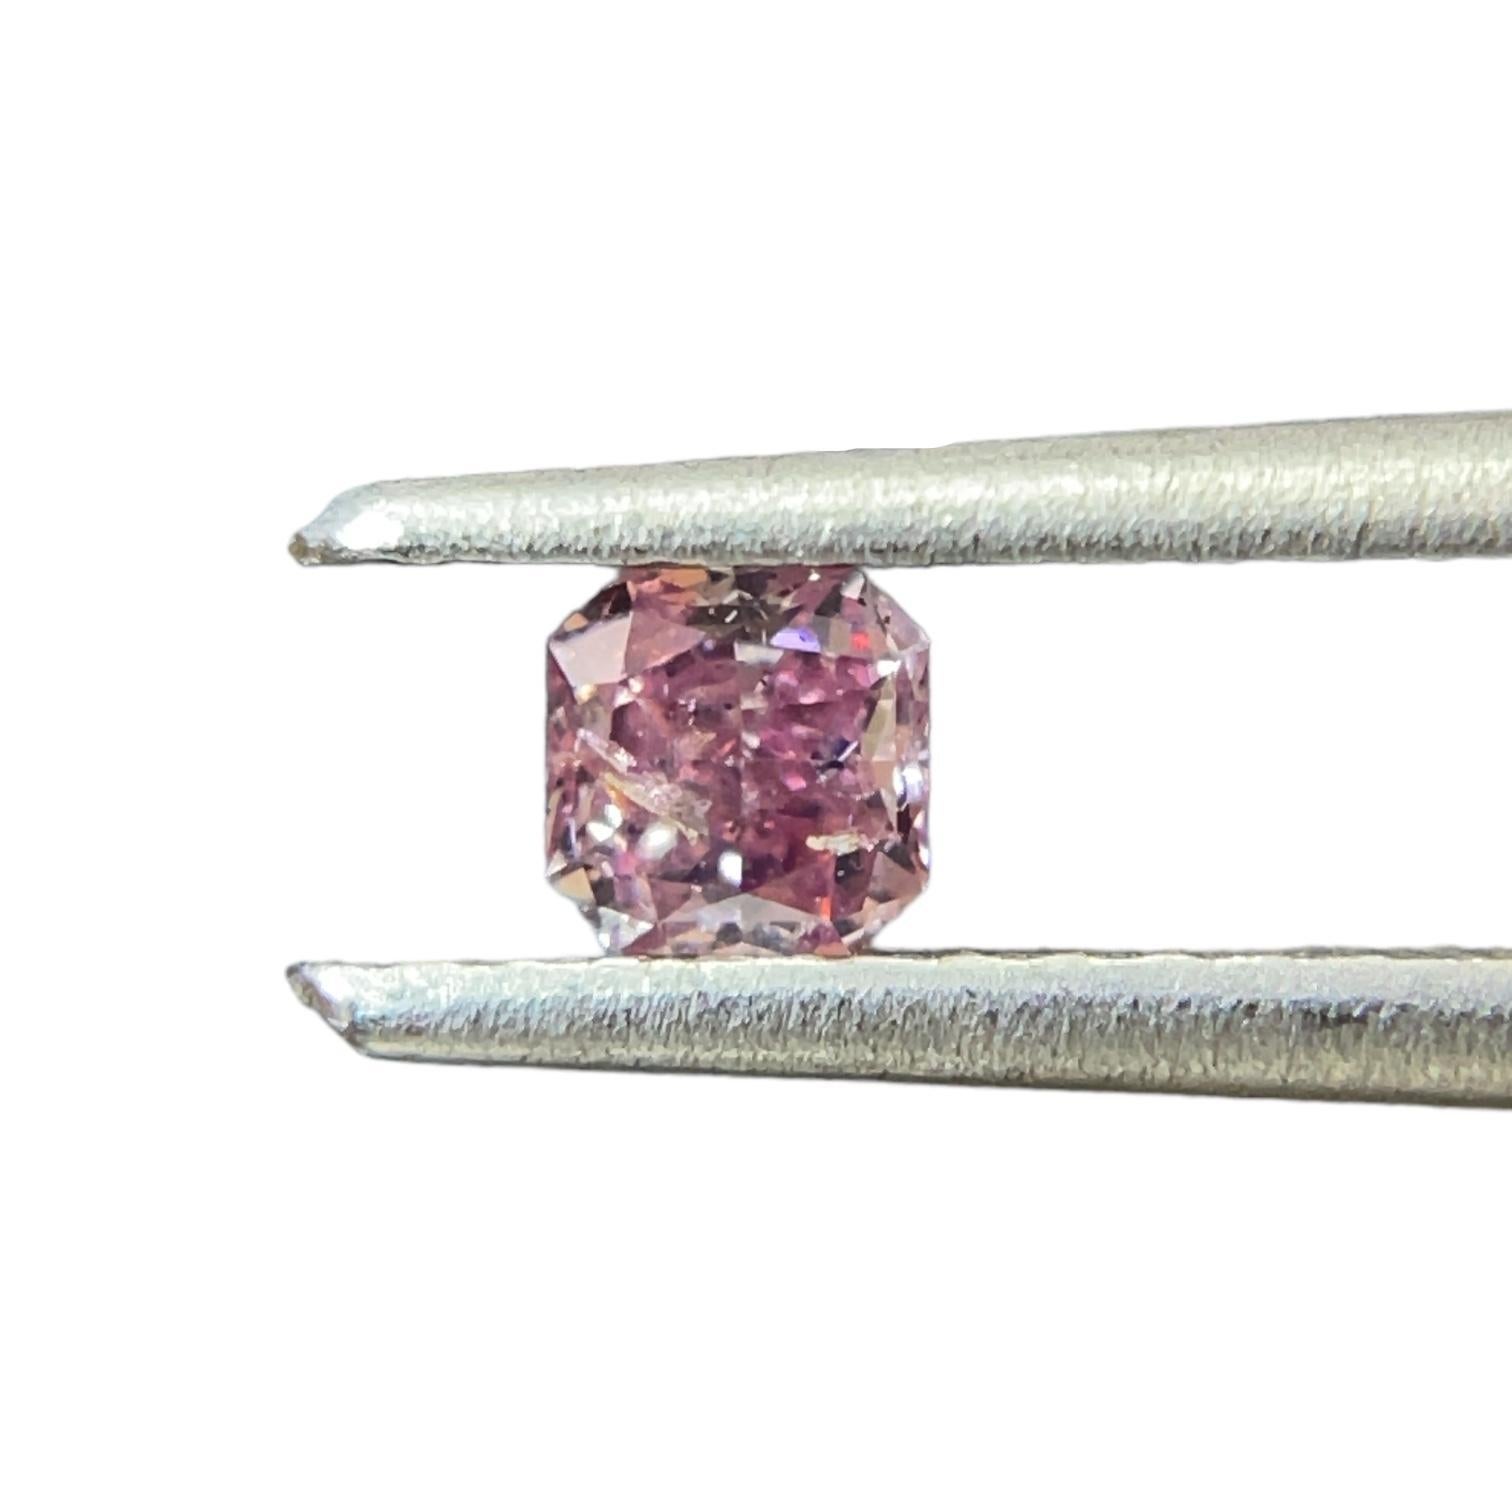 Moderne Diamant naturel rose intense fantaisie de 0,18 carat certifié GIA en vente